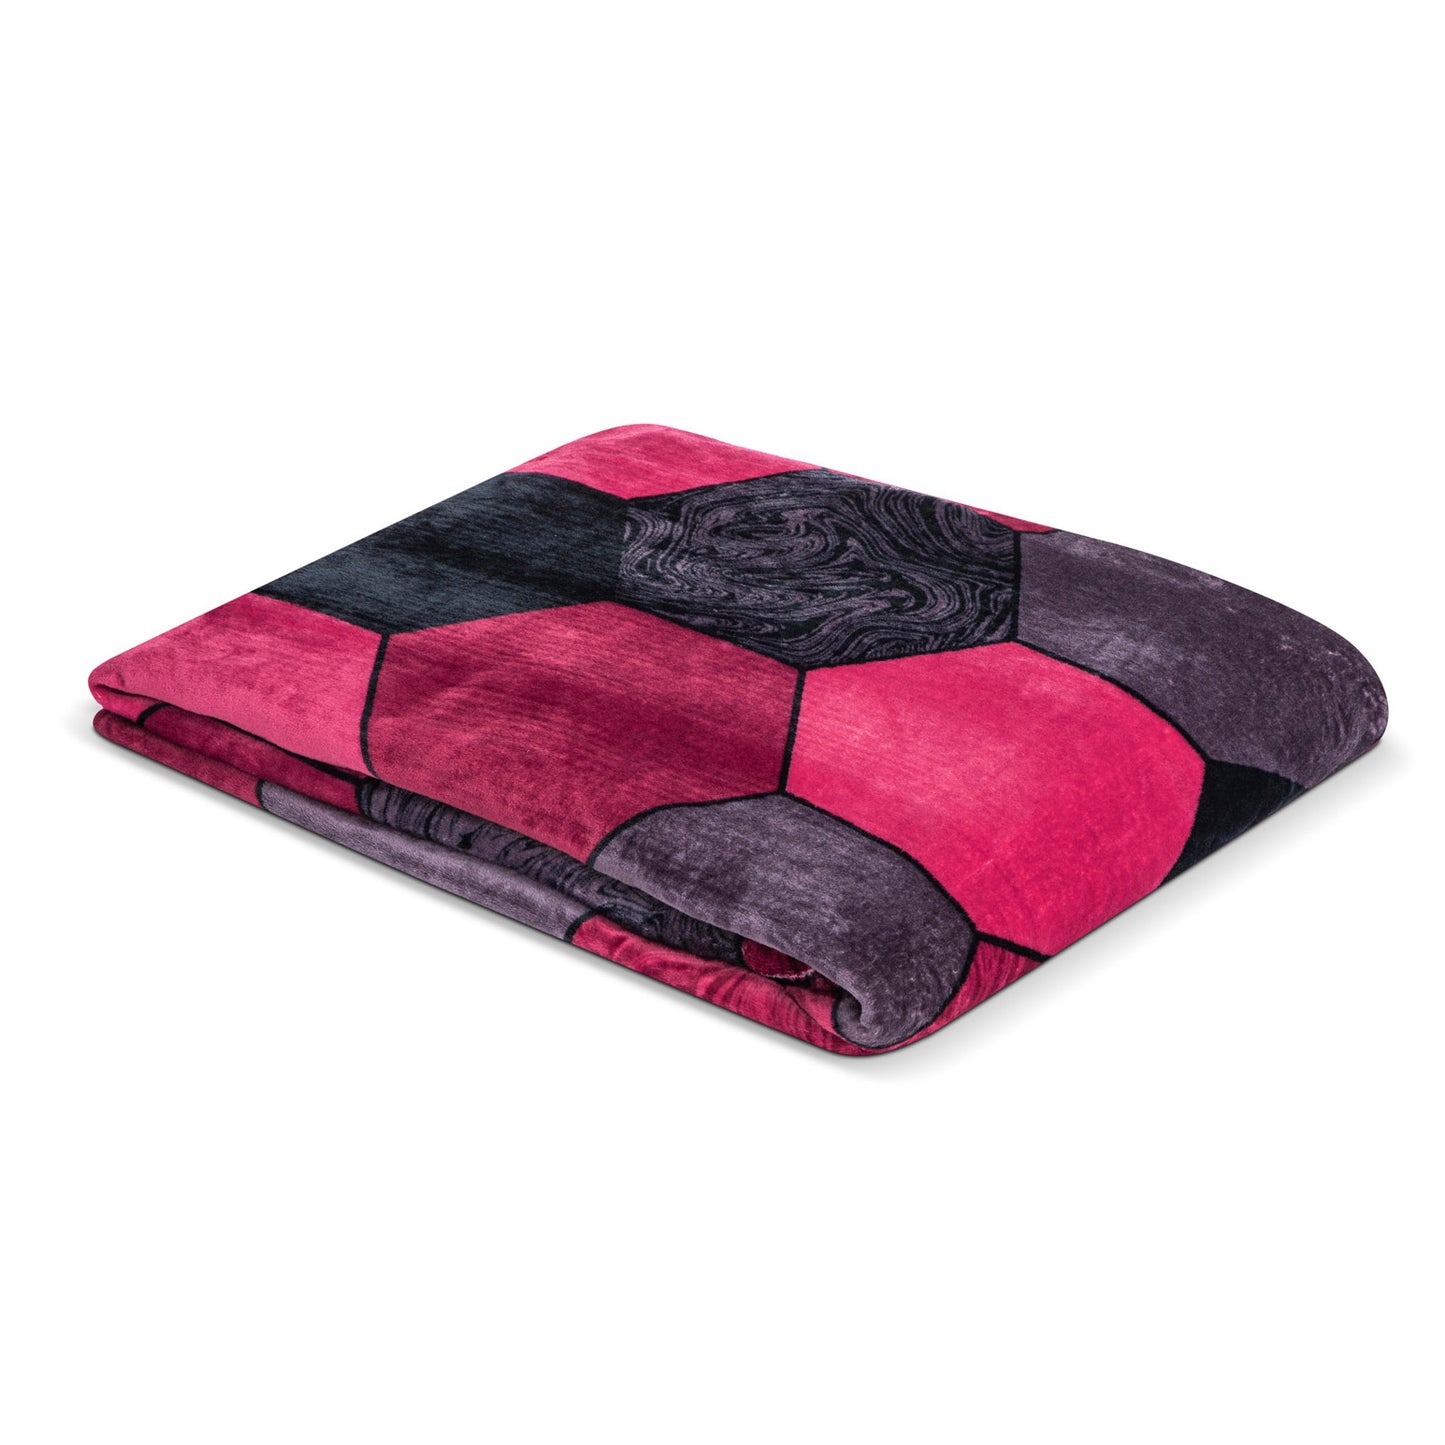 Cobertor flannel ligero Granada